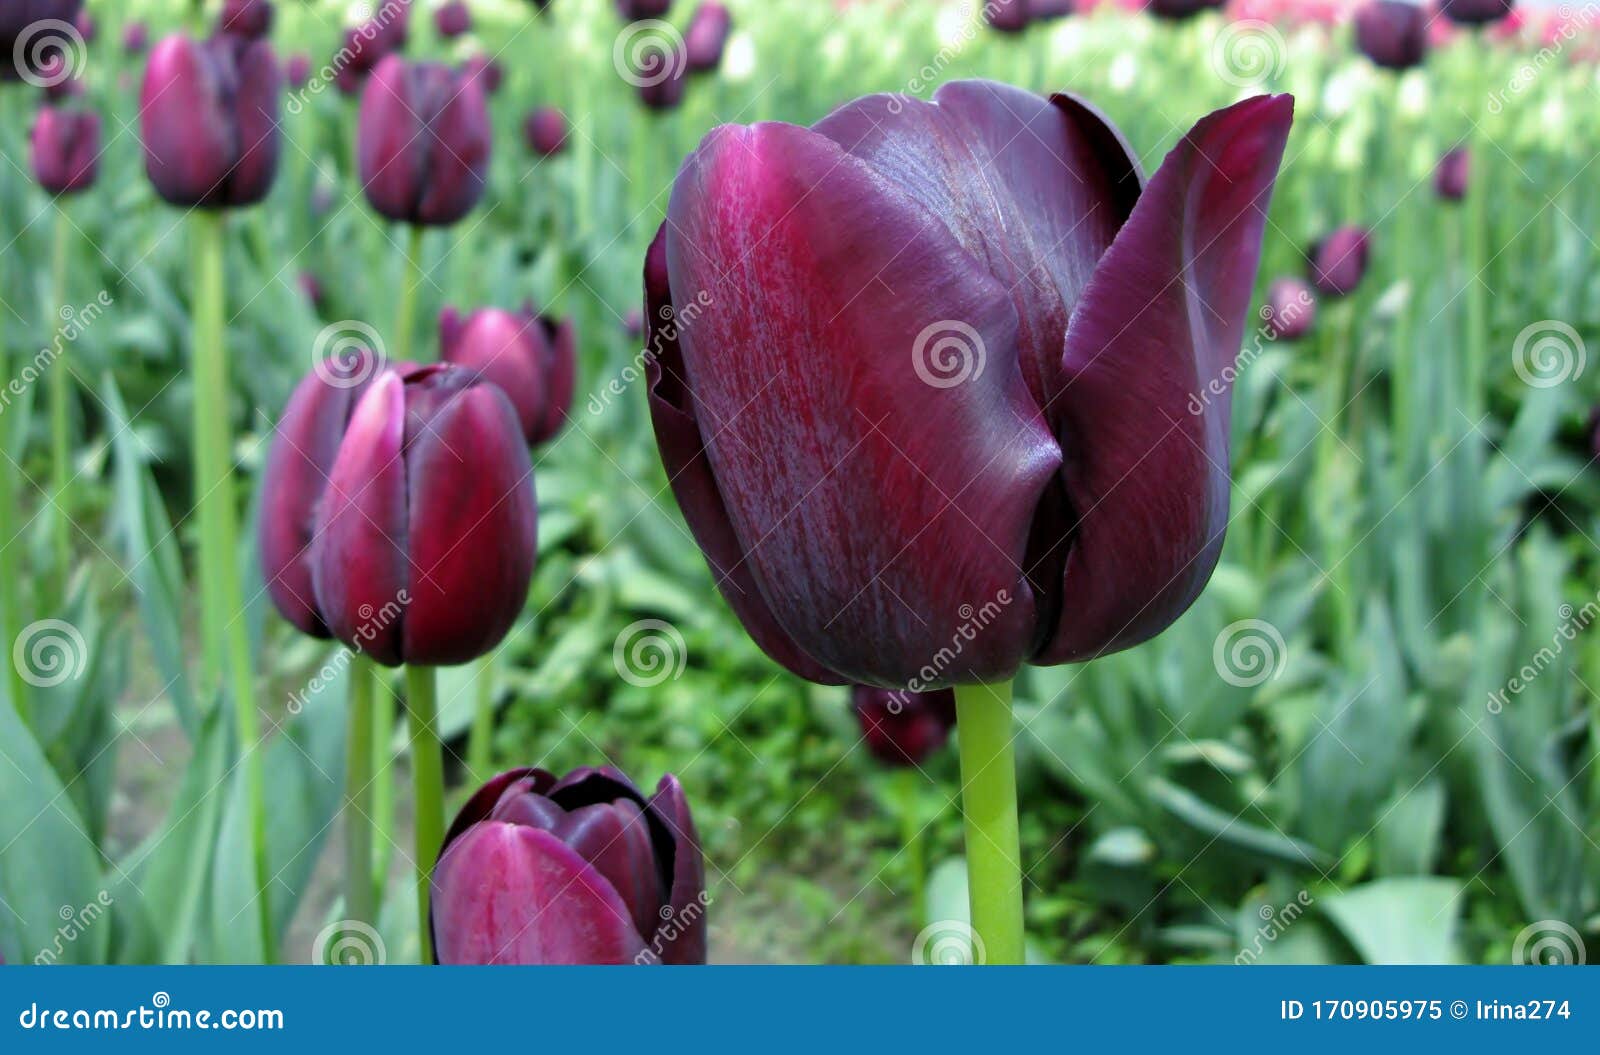 Queen Of The Night Deep Purple Tulips Stock Image Image Of Bloom Unique 170905975